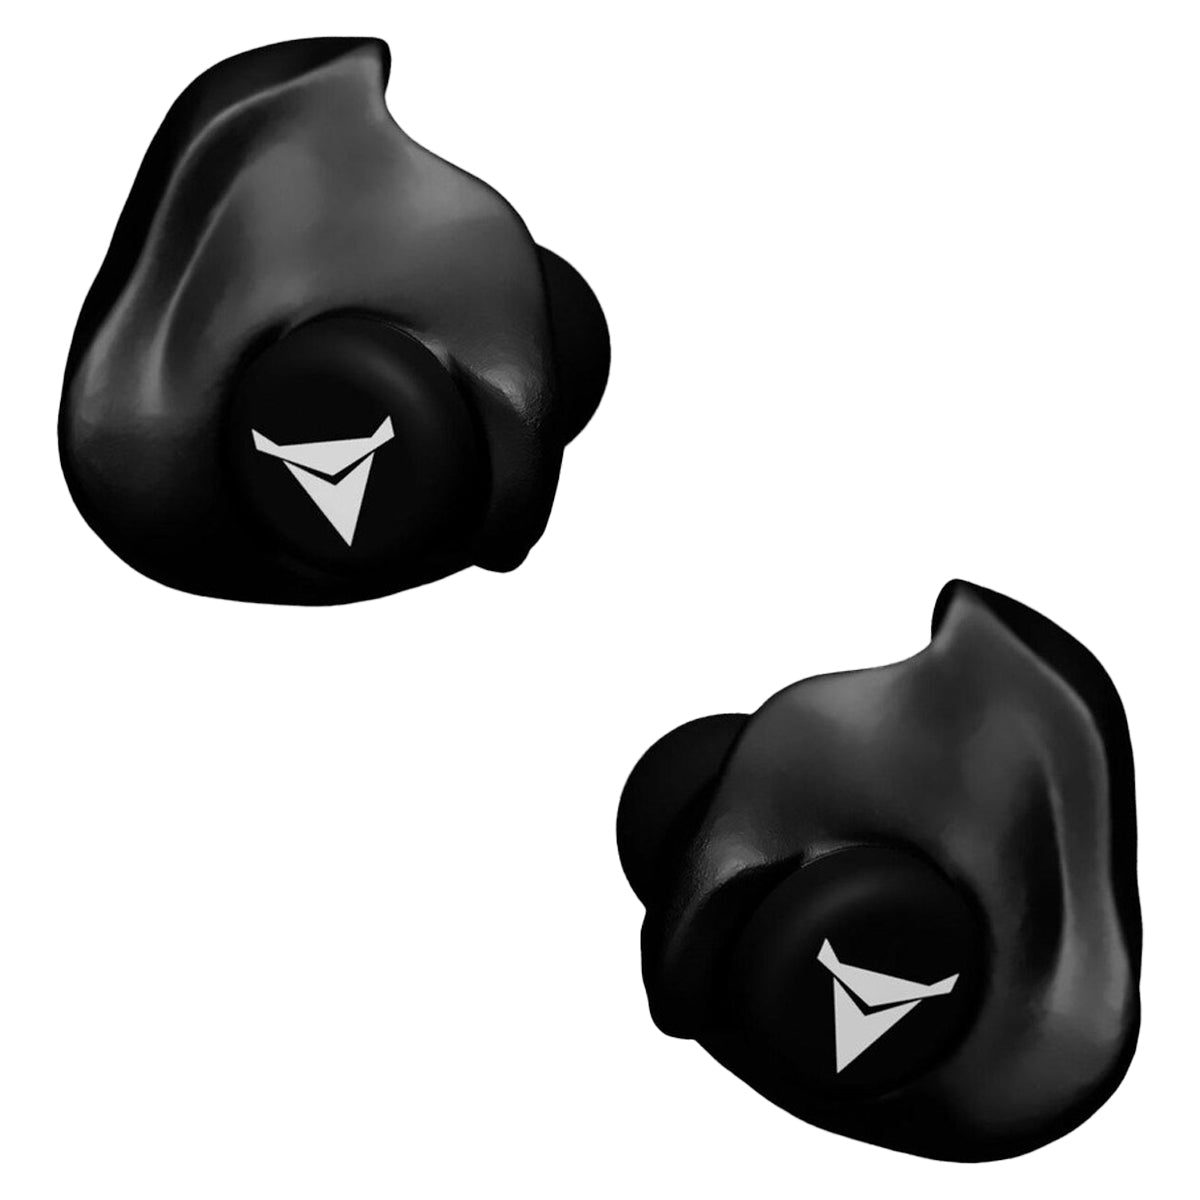 Decibullz Custom Molded Earplugs in Black by GOHUNT | Decibullz - GOHUNT Shop